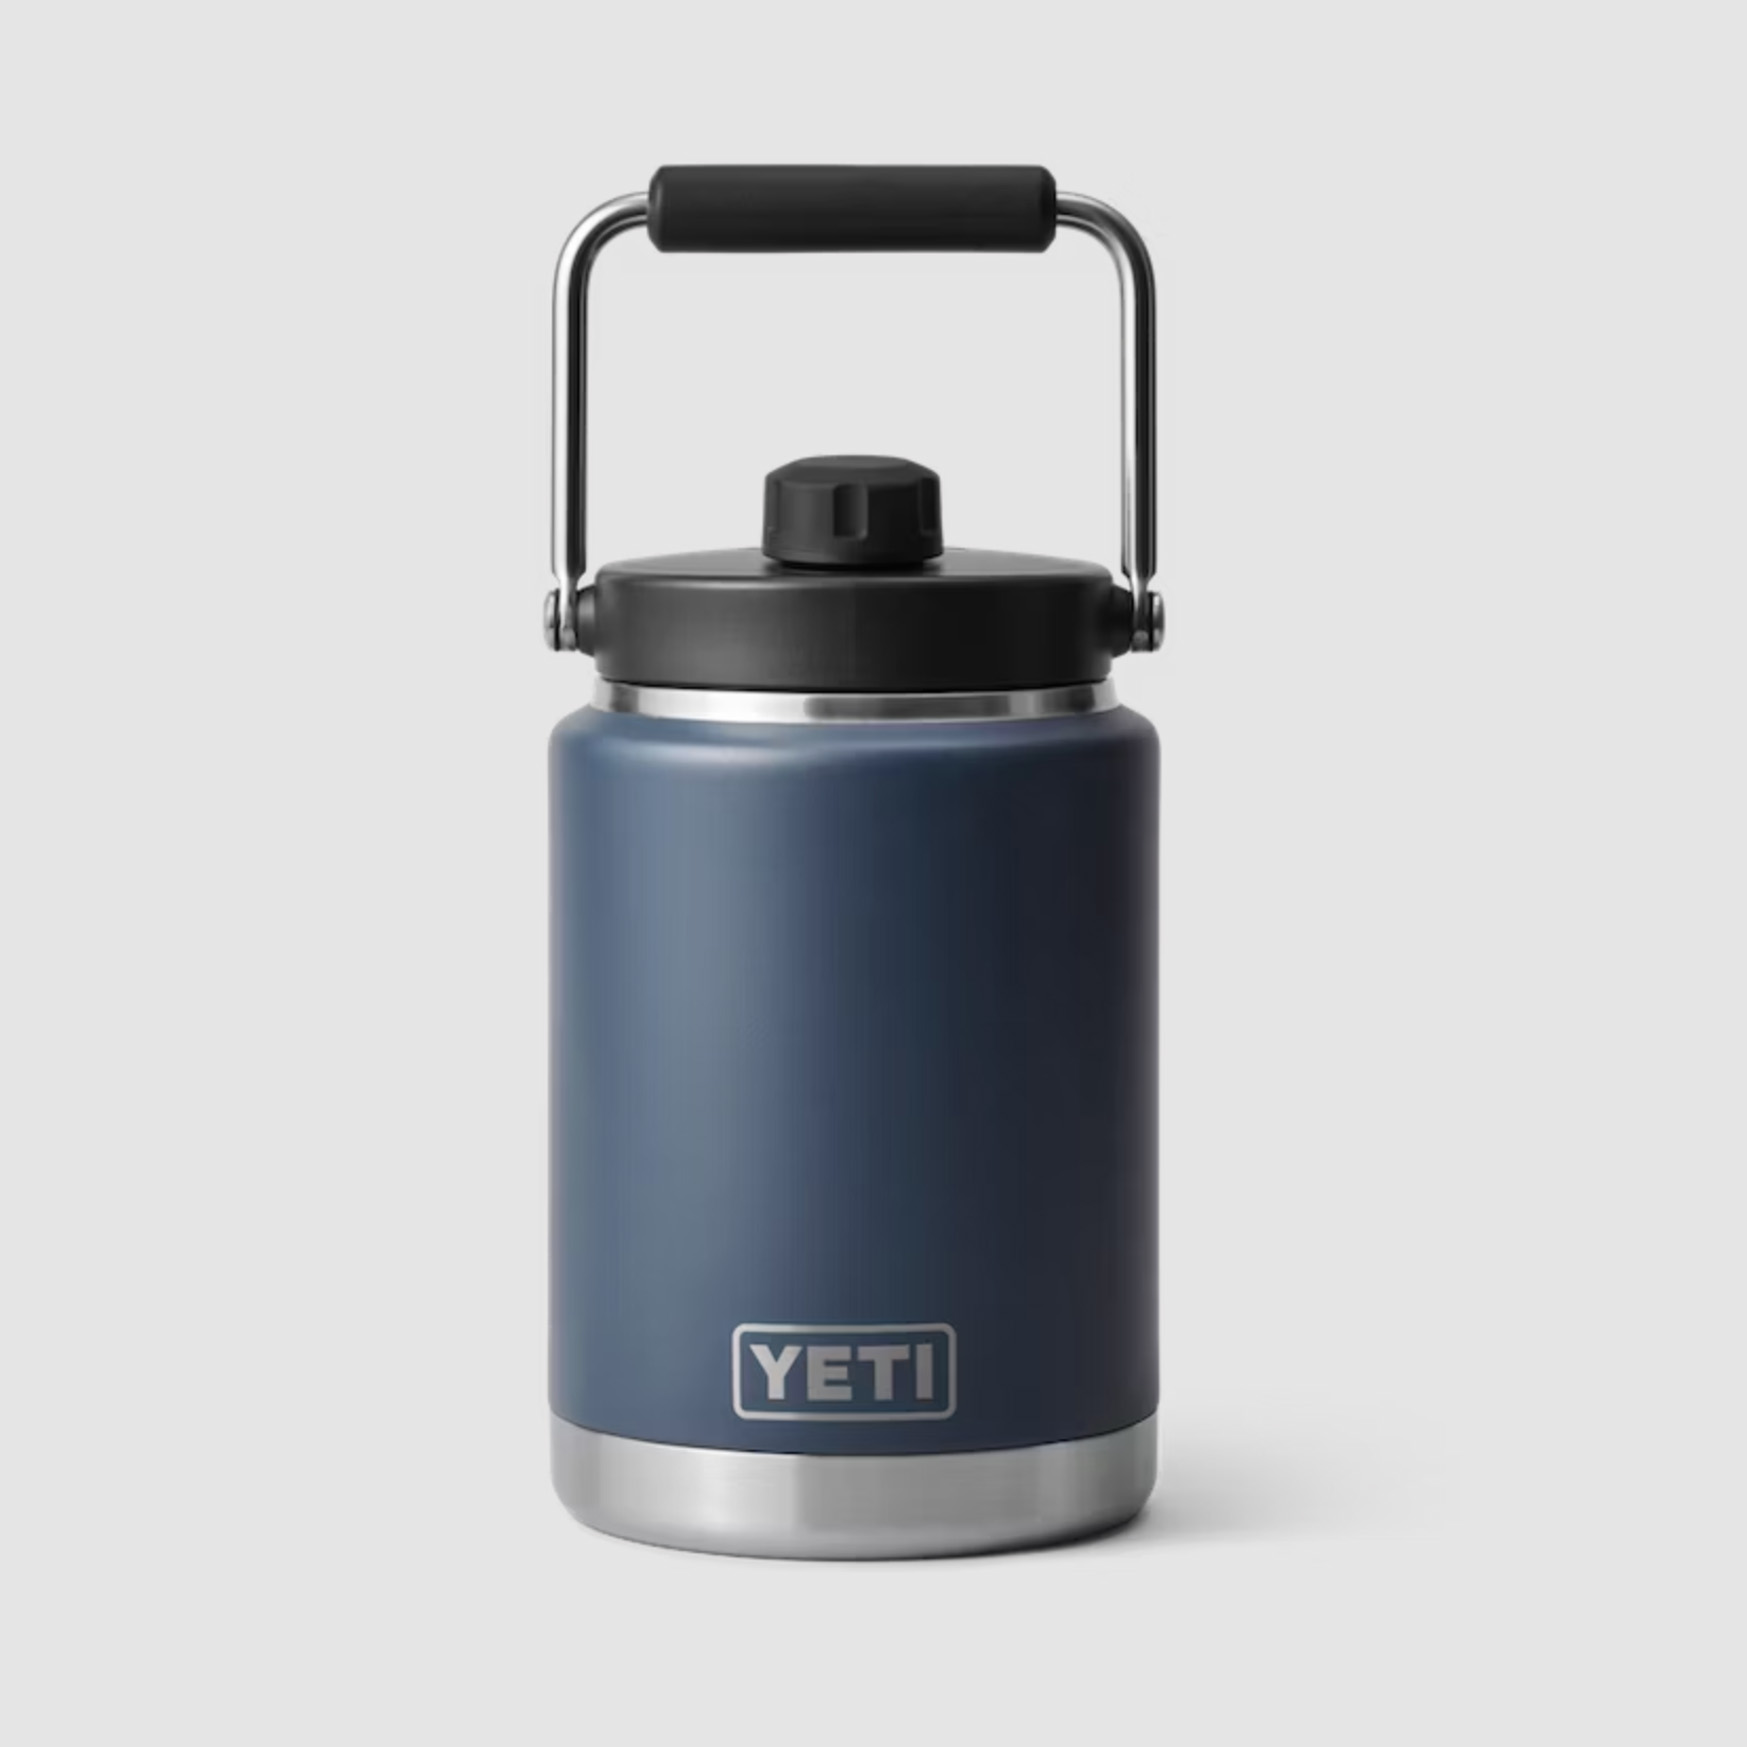 Yeti Half Gallon Water Jug in blue with black lid